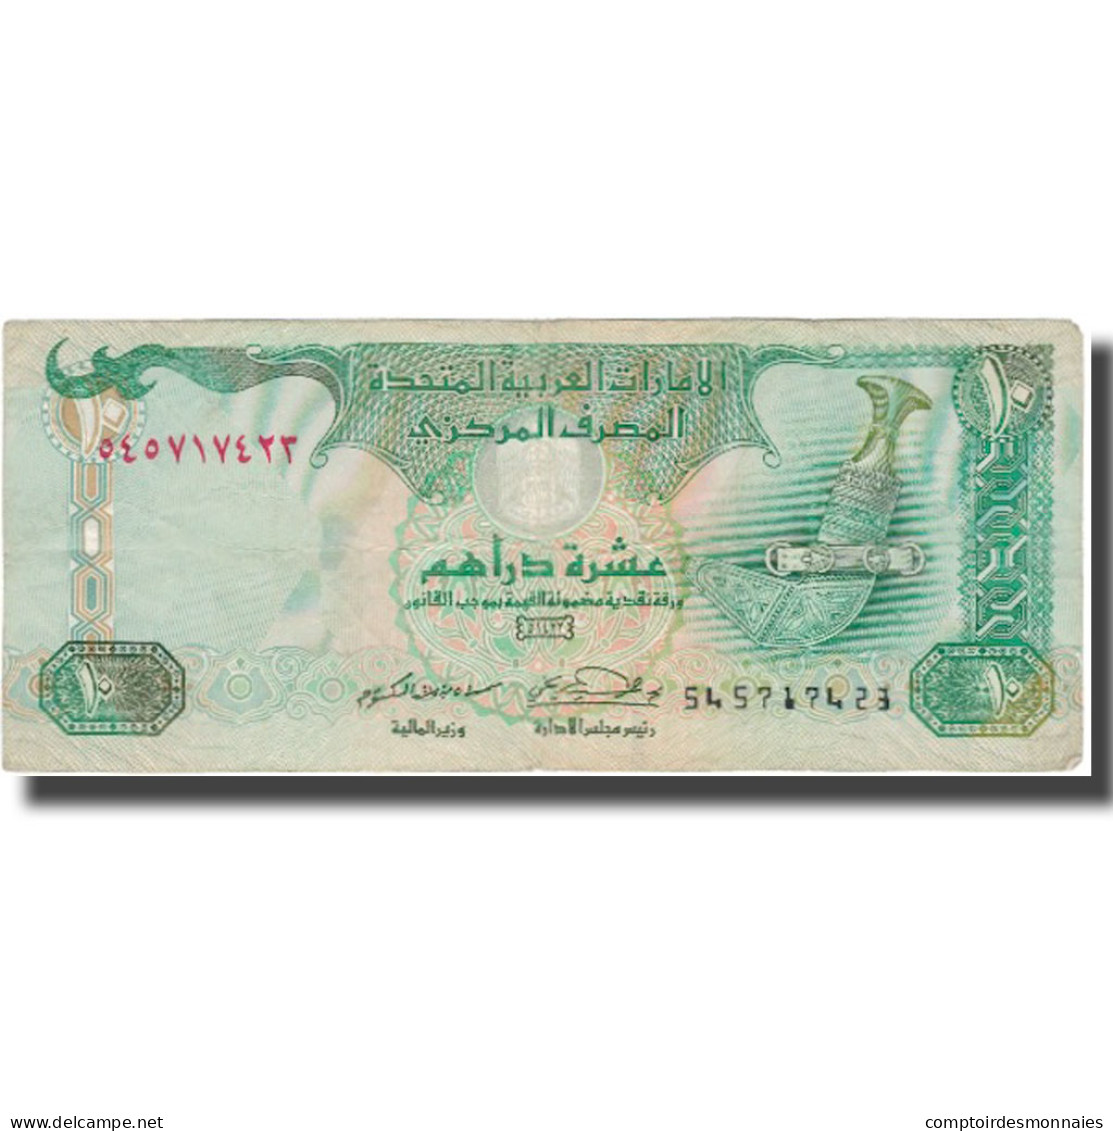 Billet, United Arab Emirates, 10 Dirhams, 2001, 2001, KM:20b, TB - Emiratos Arabes Unidos